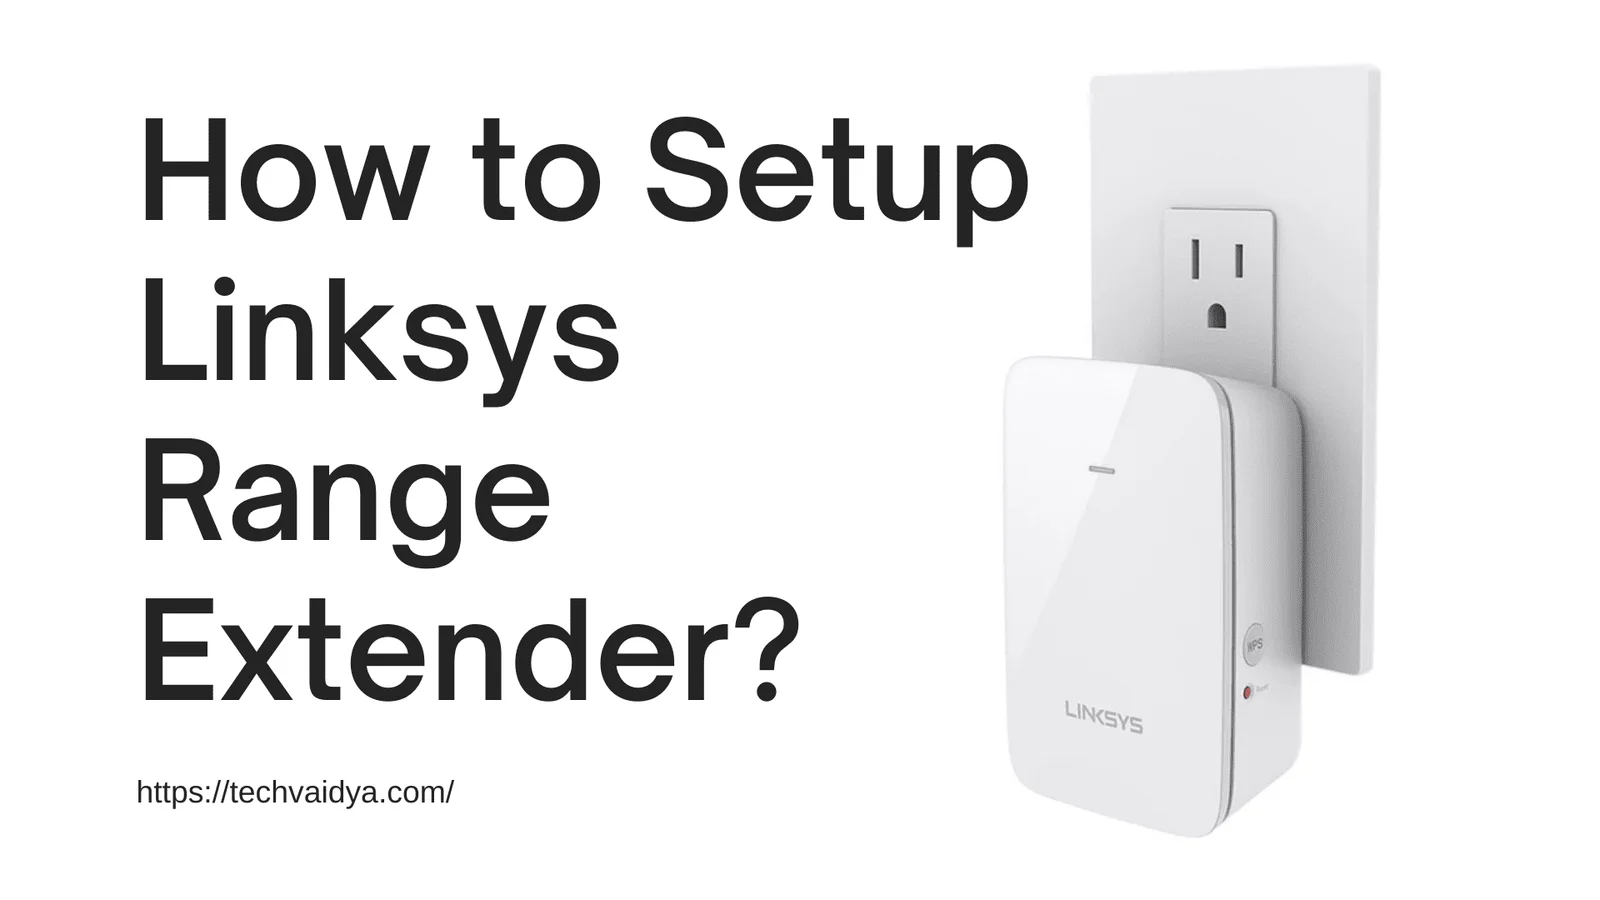 How to Setup Linksys Range Extender?